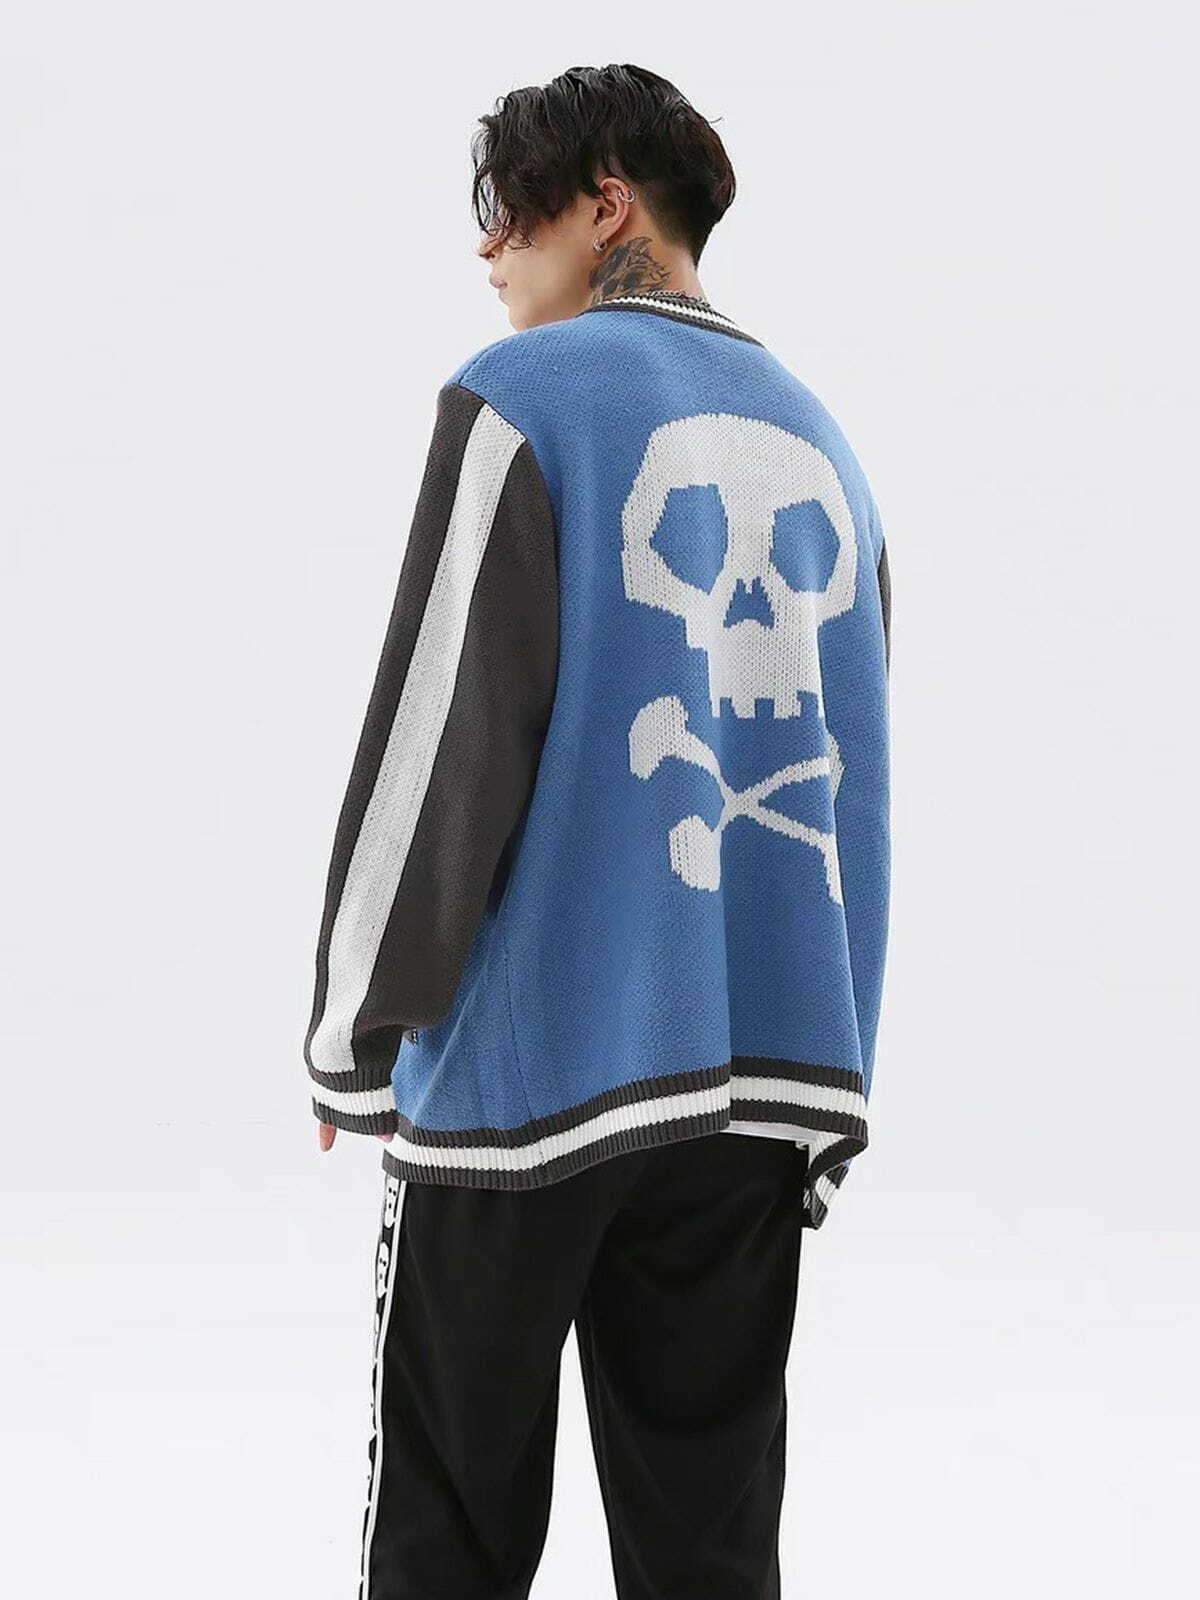 stylish skeleton stitching sweater edgy y2k fashion essential 4648